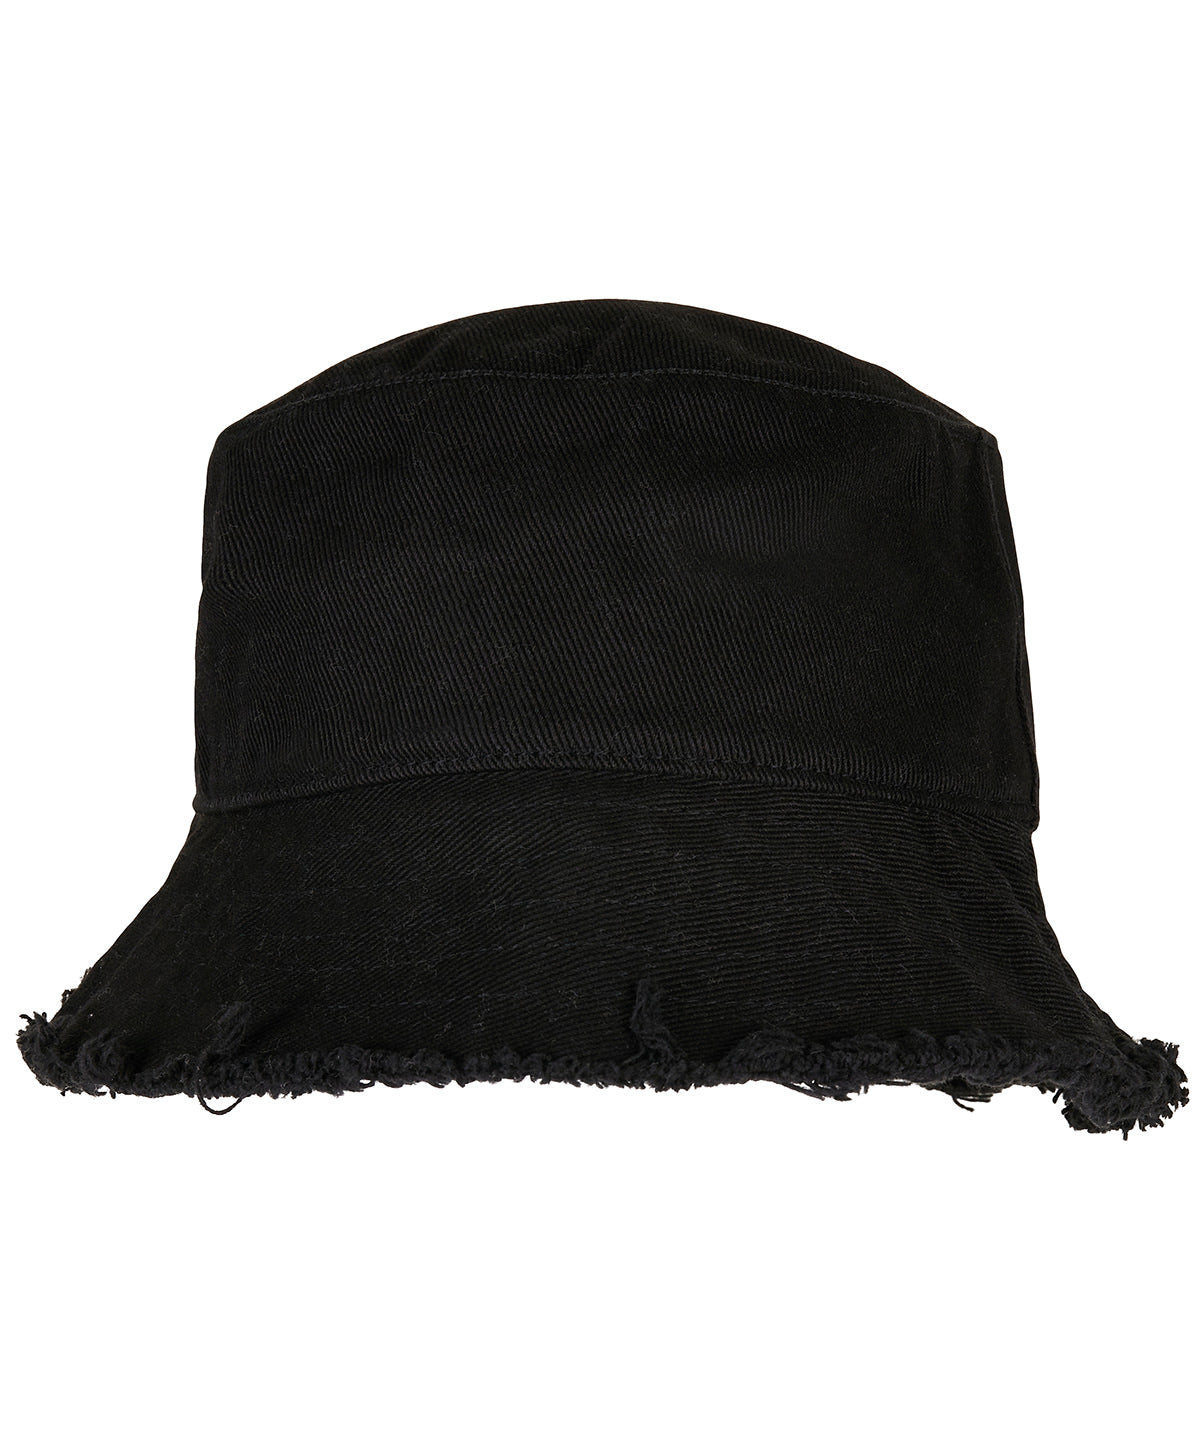 Húfur - Open Edge Bucket Hat